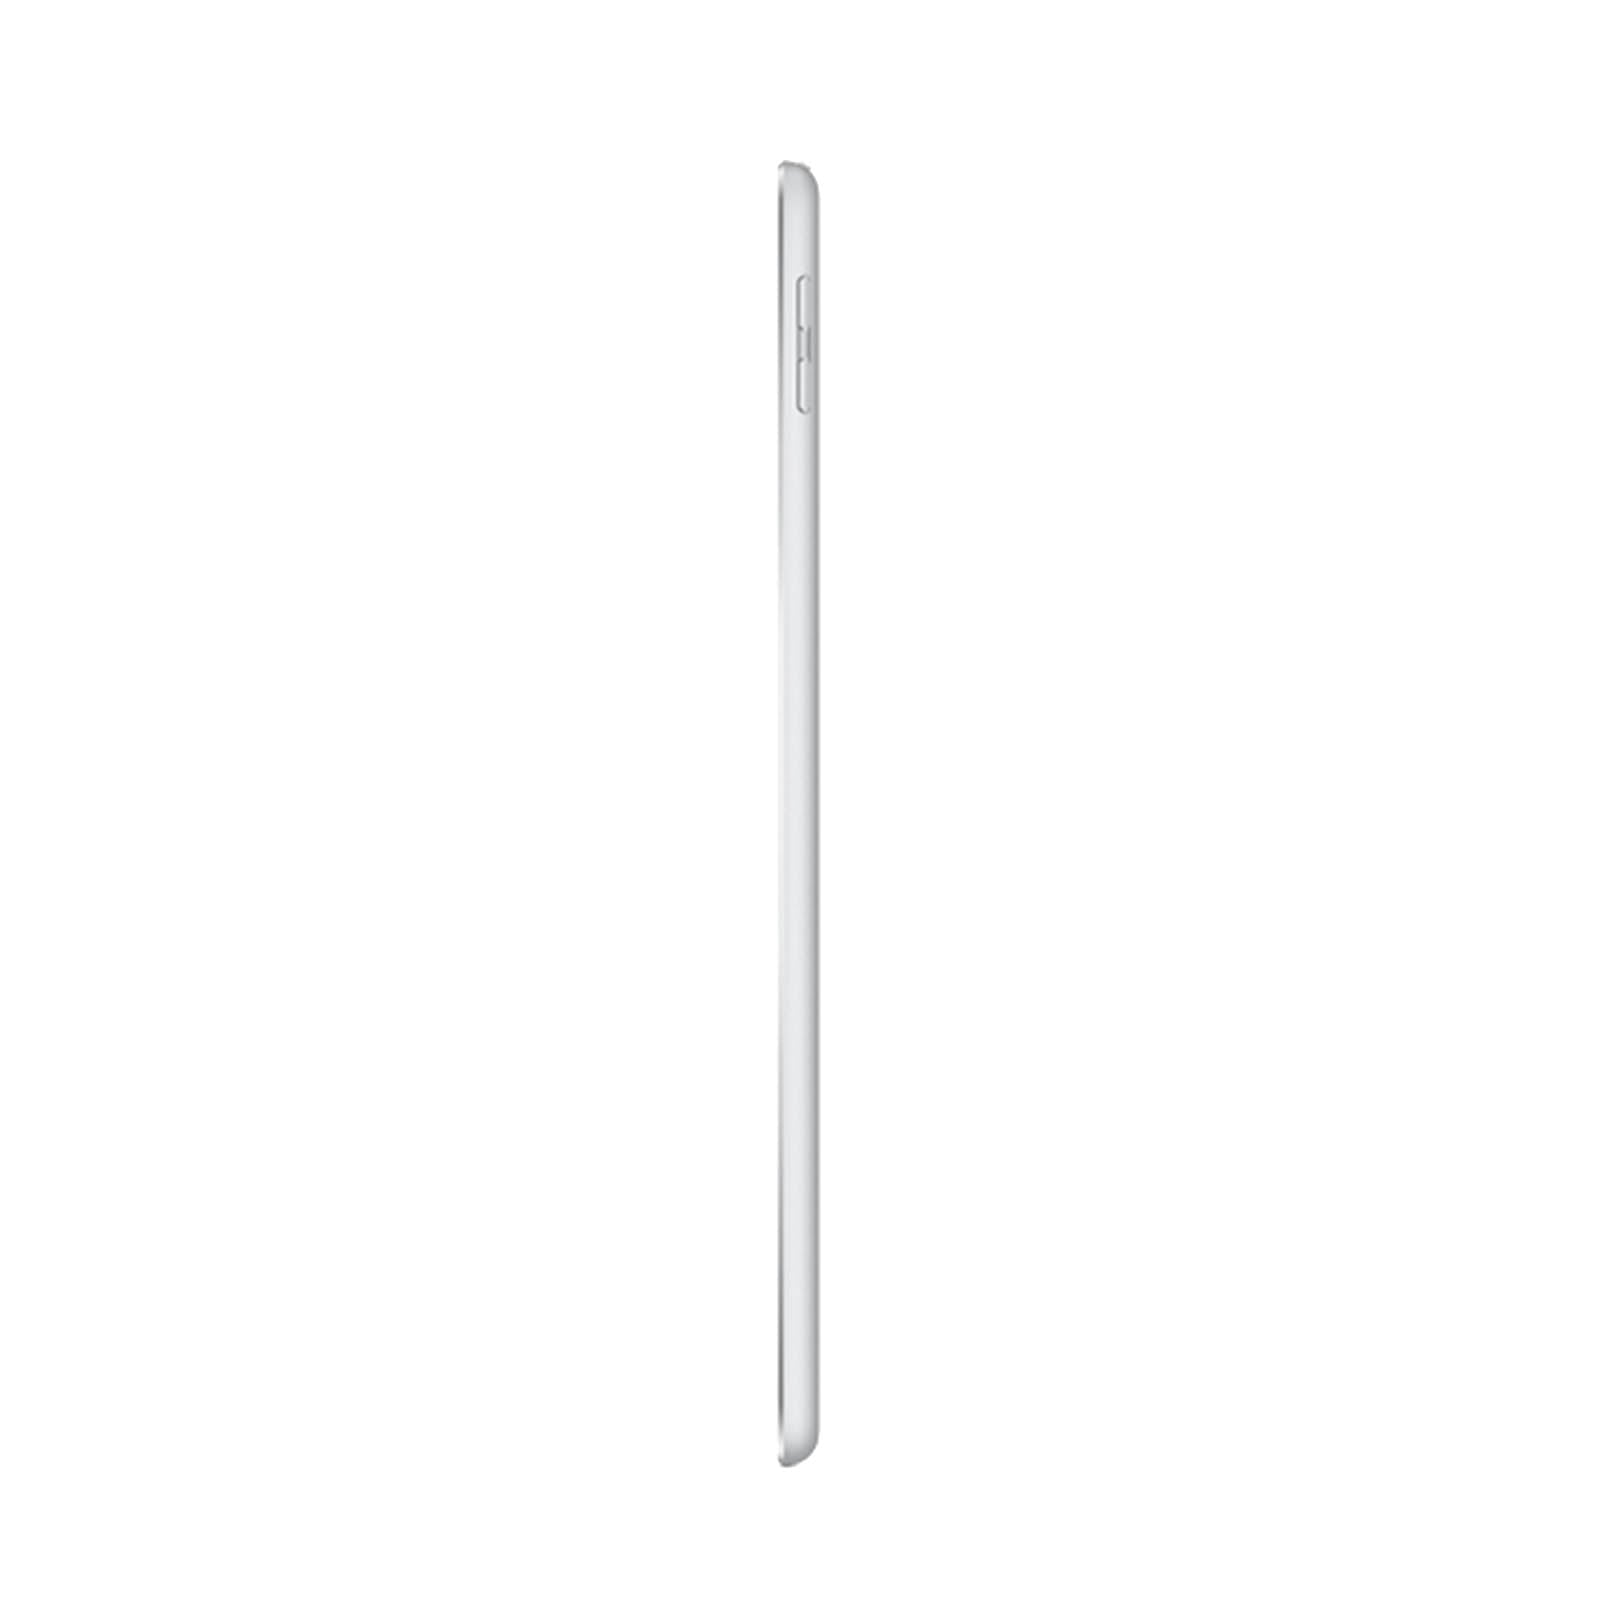 Apple iPad 5 128GB WiFi Silber Gut